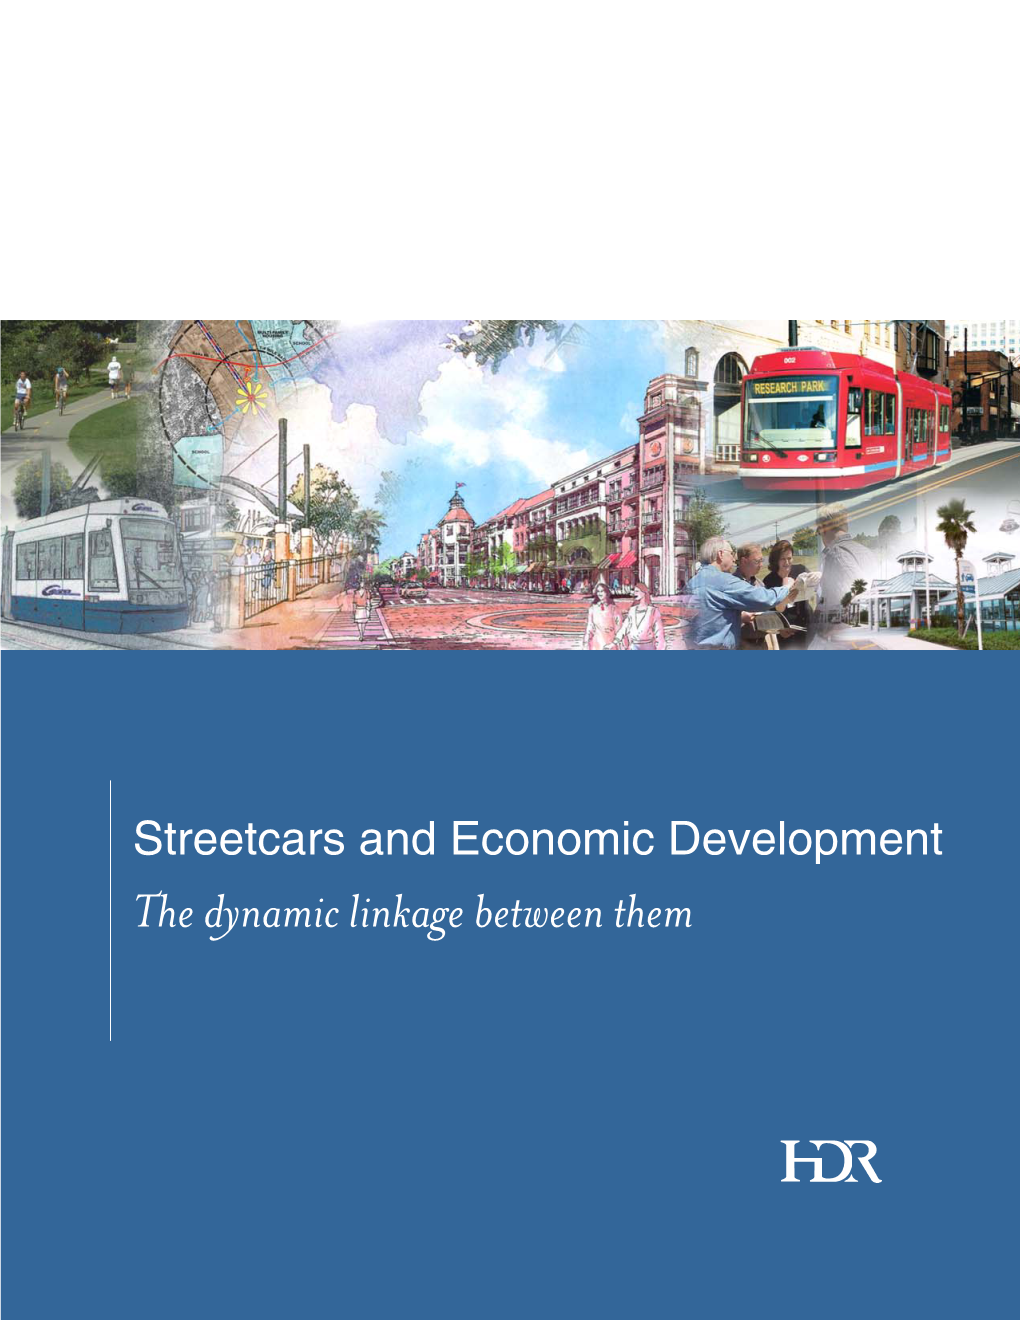 Streetcars and Economic Development the Dynamic Linkage Between Them Streetcars and Economic Development…The Linkage Between Them